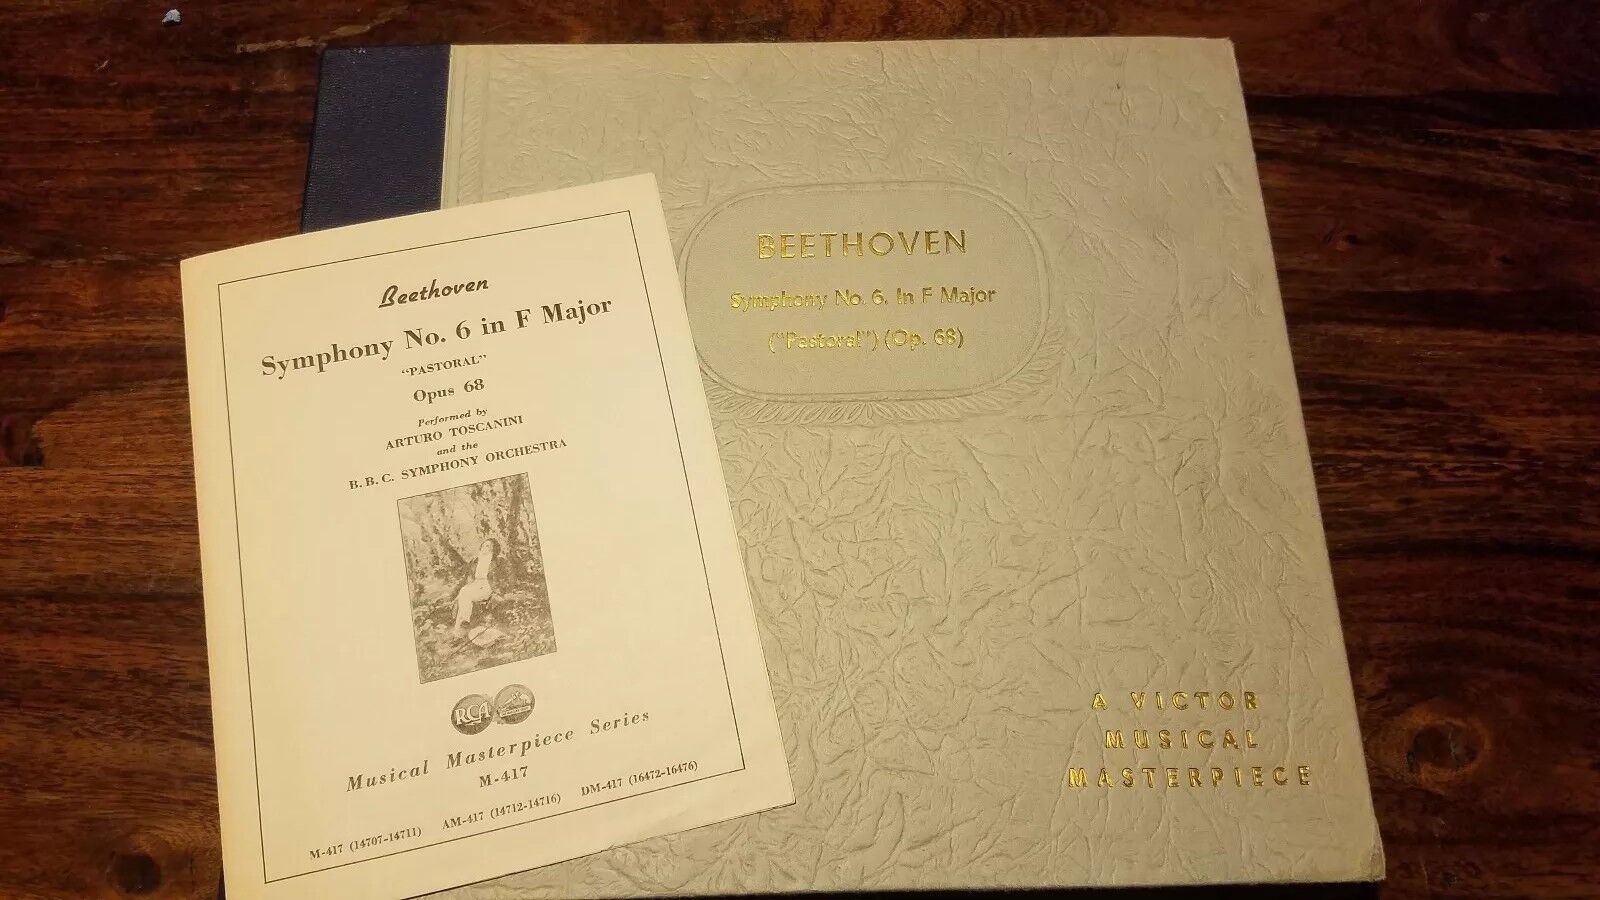 BEETHOVEN SYMPHONY NO.6 IN F MAJOR OPUS 68 ARTURO TOSCANI B.B.C SYMPHONY ORCHEST